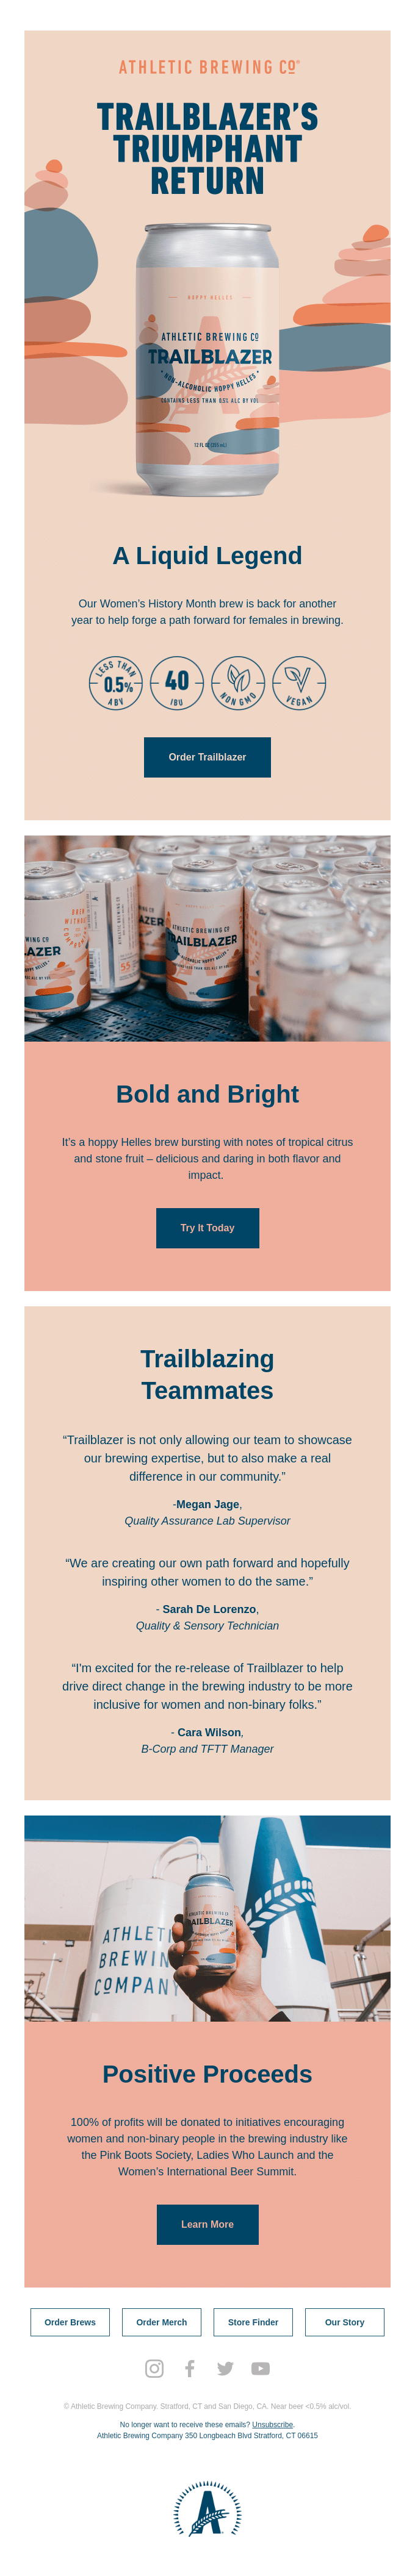 Trailblazer Hoppy Helles | Back and Blazin' Trails! - Athletic Brewing Email Newsletter